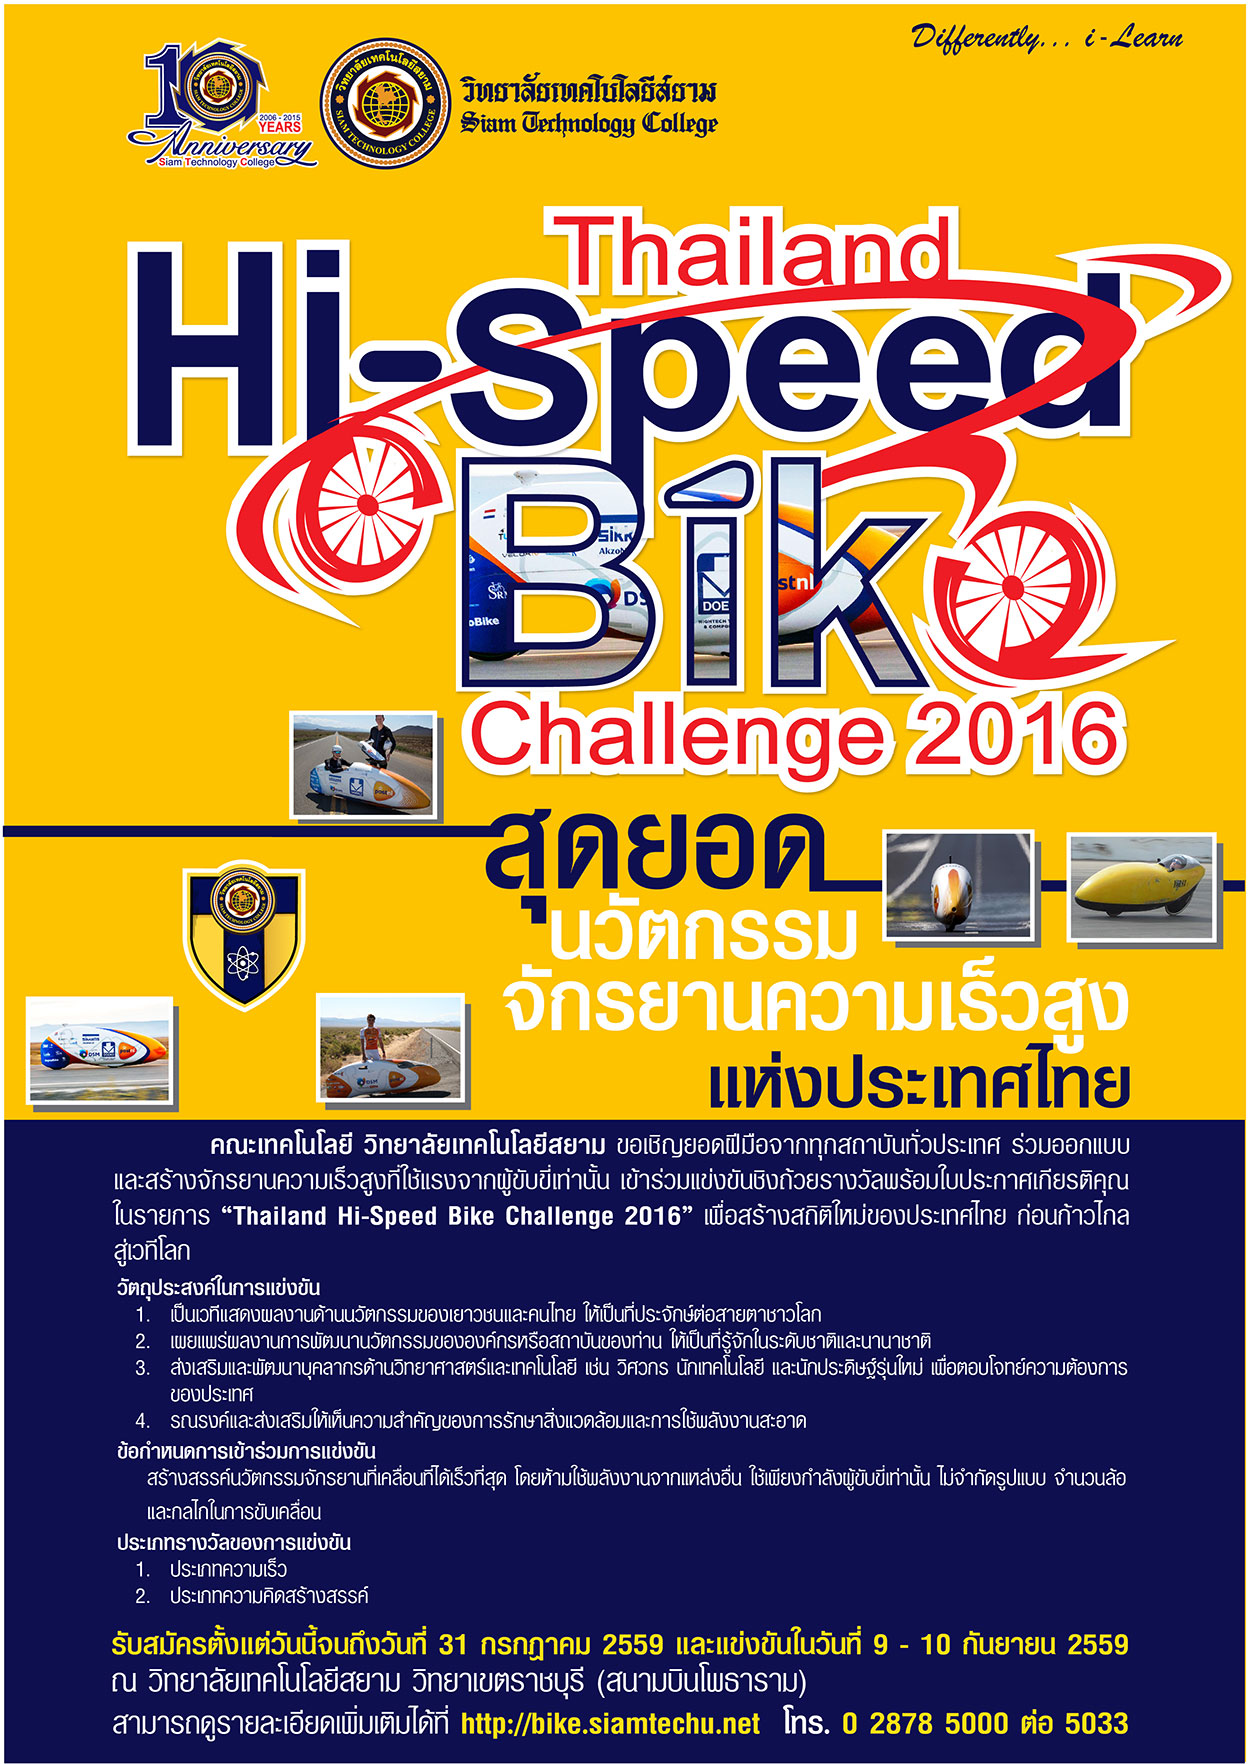 Thailand Hi-Speed Bike Challenge 2016 สุดยอดนวัตกรรมจักรยานความเร็วสูงแห่งประเทศไทย